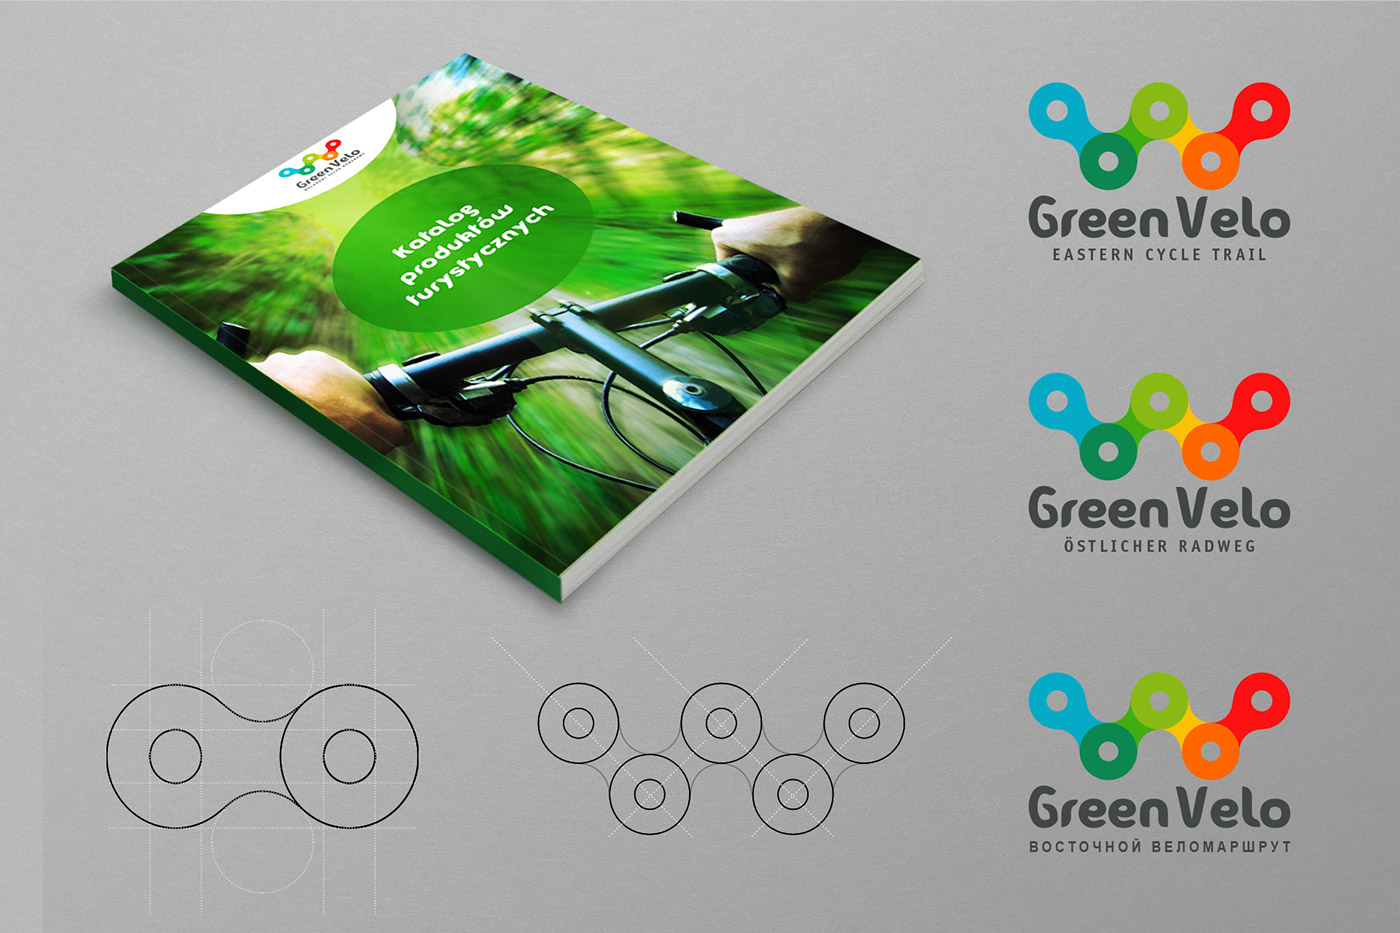 green velo brand architecture visual identity signage design